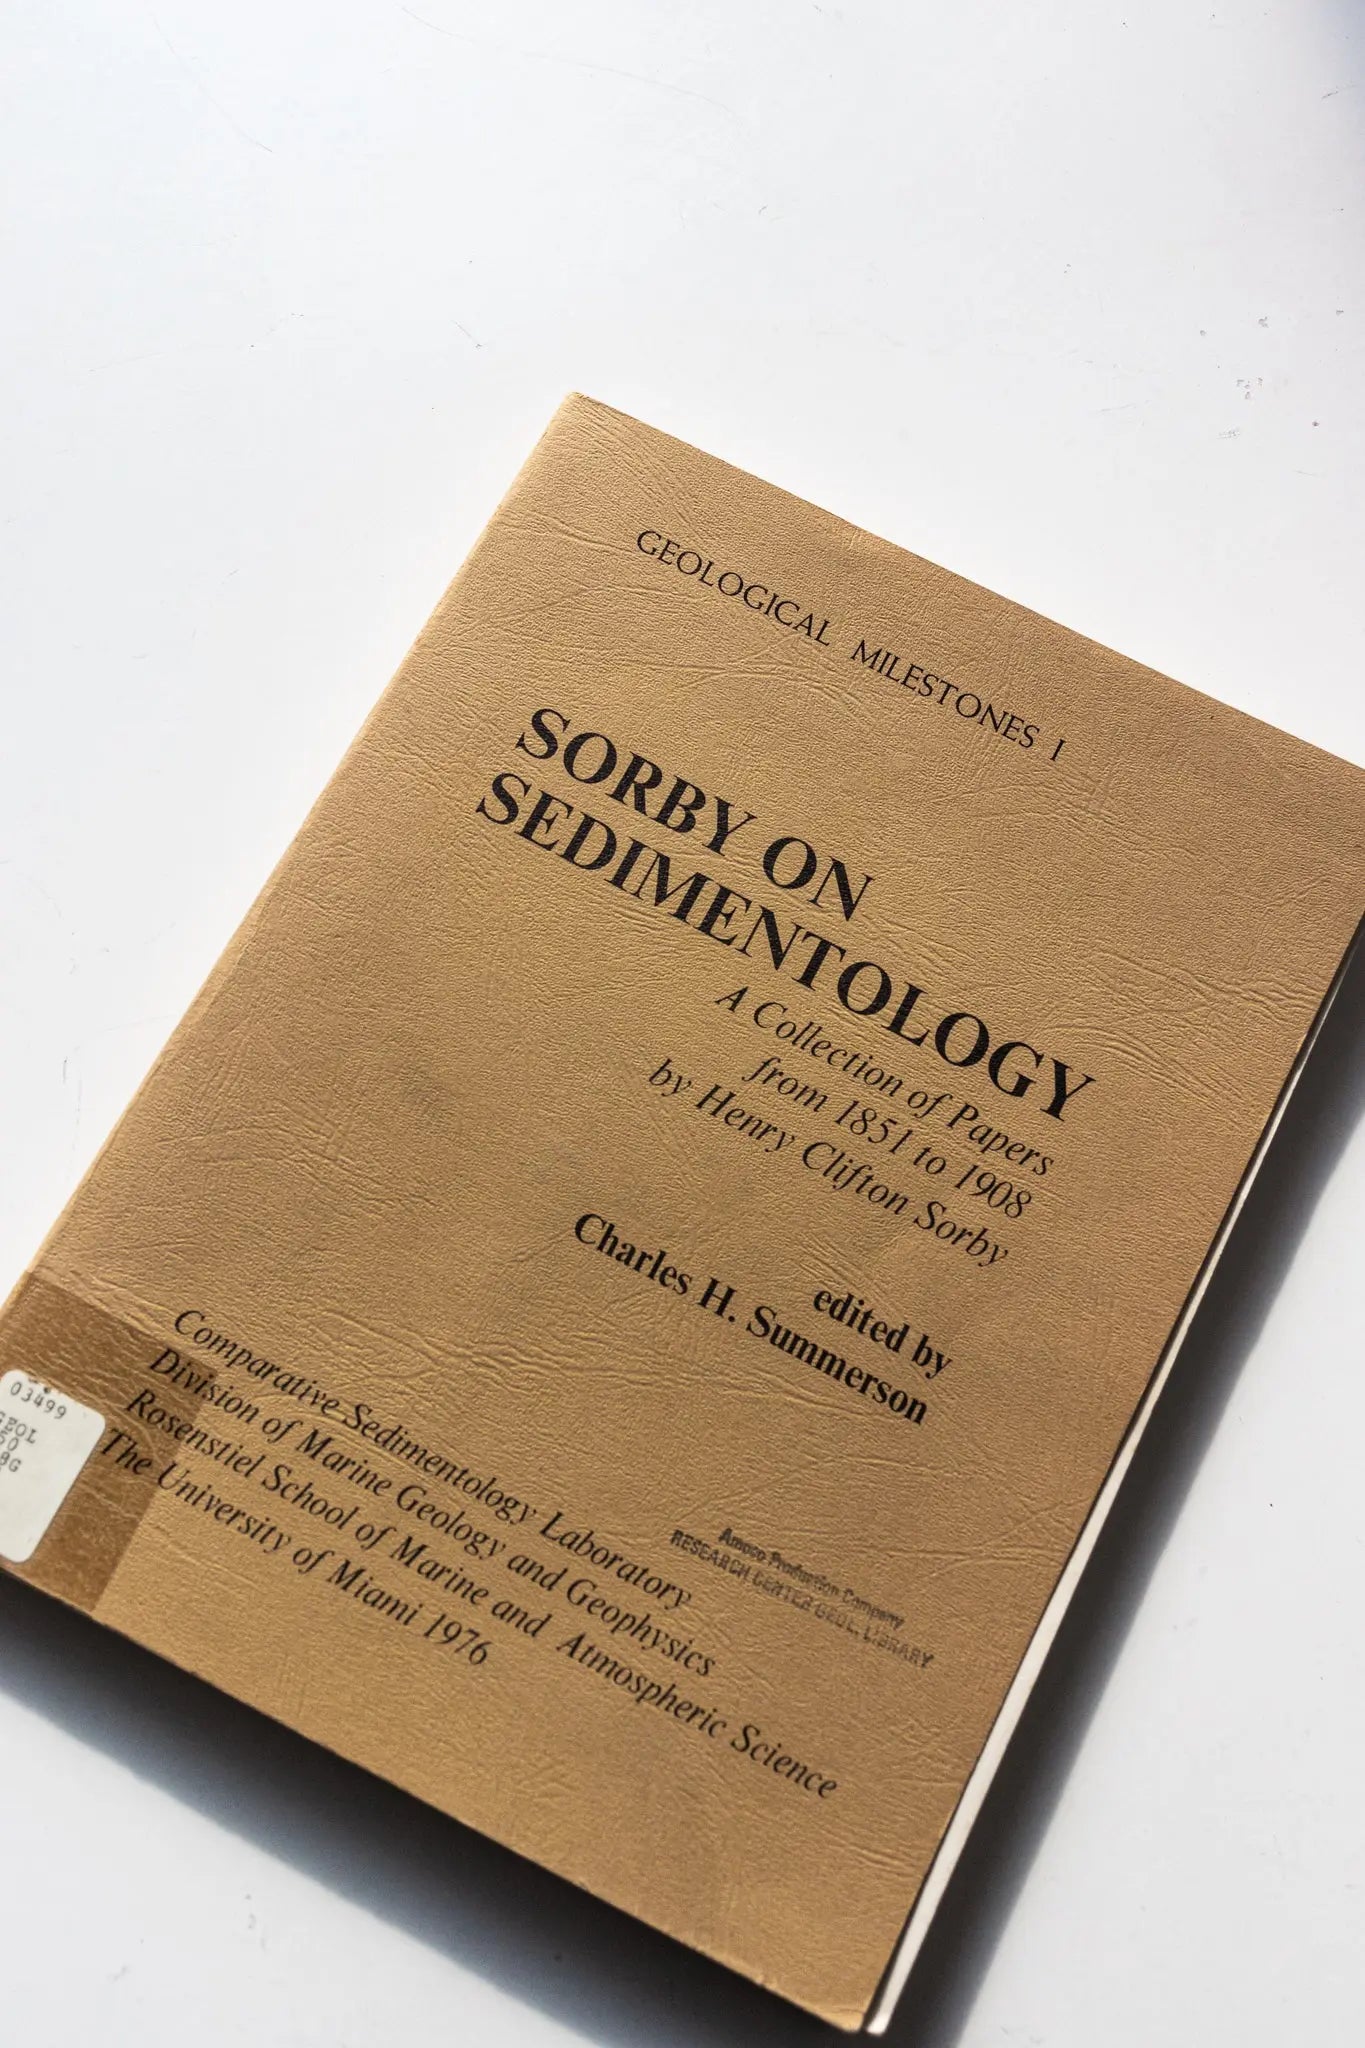 Sorby on Sedimentology - Stemcell Science Shop